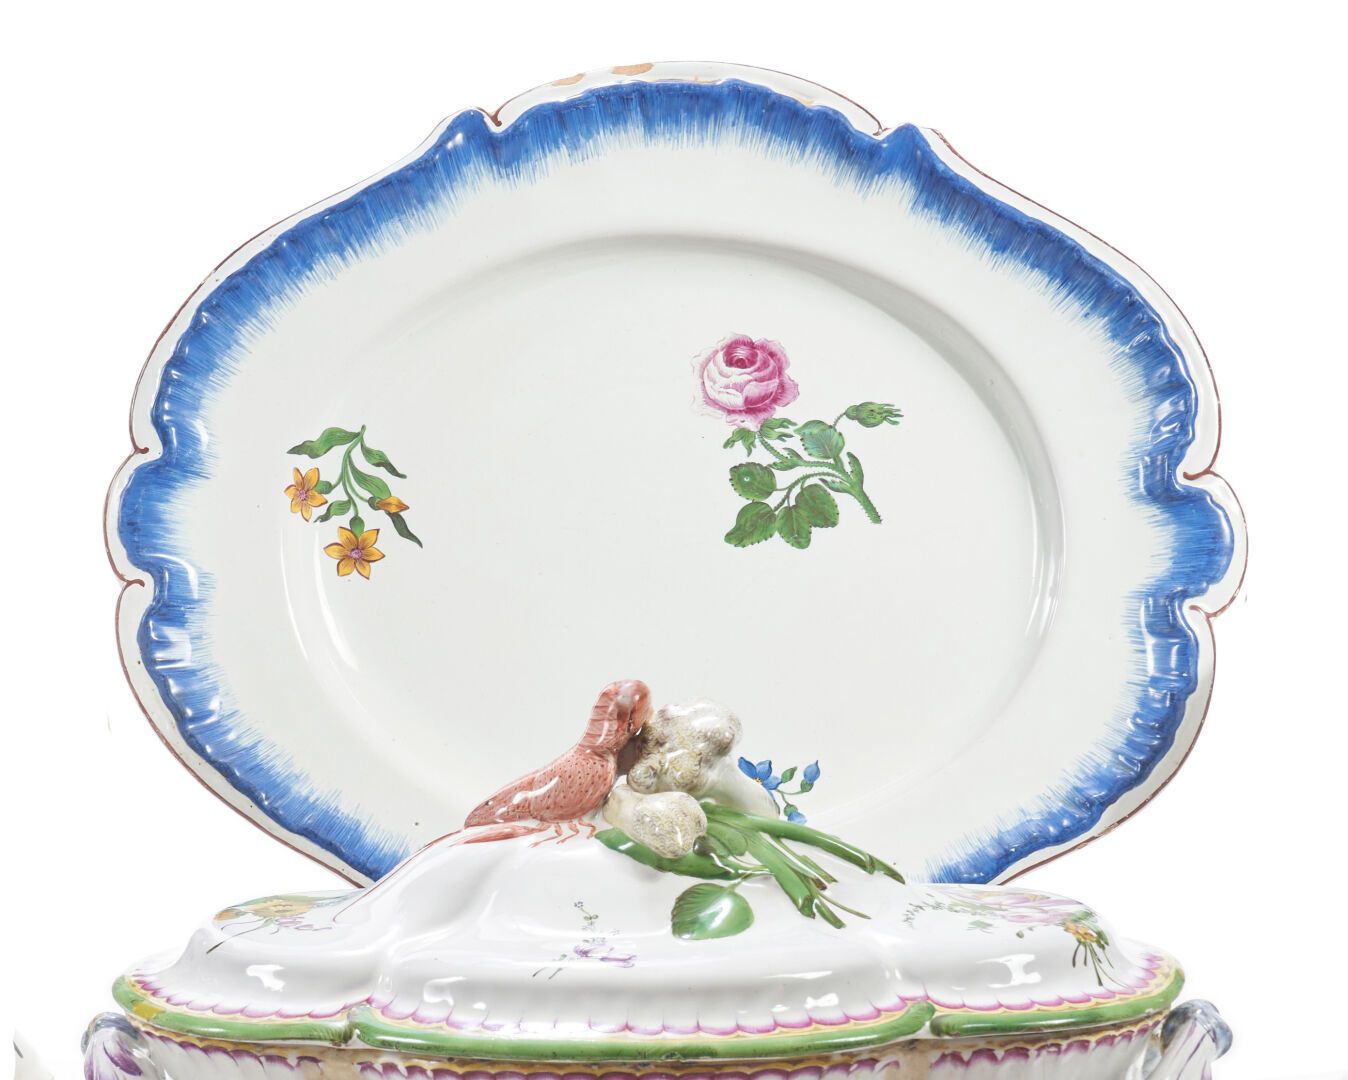 Null 斯特拉斯堡
椭圆形陶器托盘，边缘有轮廓，上面有三朵花的多色装饰，质量很好，边缘是蓝色的梳子。
保罗-汉农的制造。
18世纪，约1750-1755年。
&hellip;